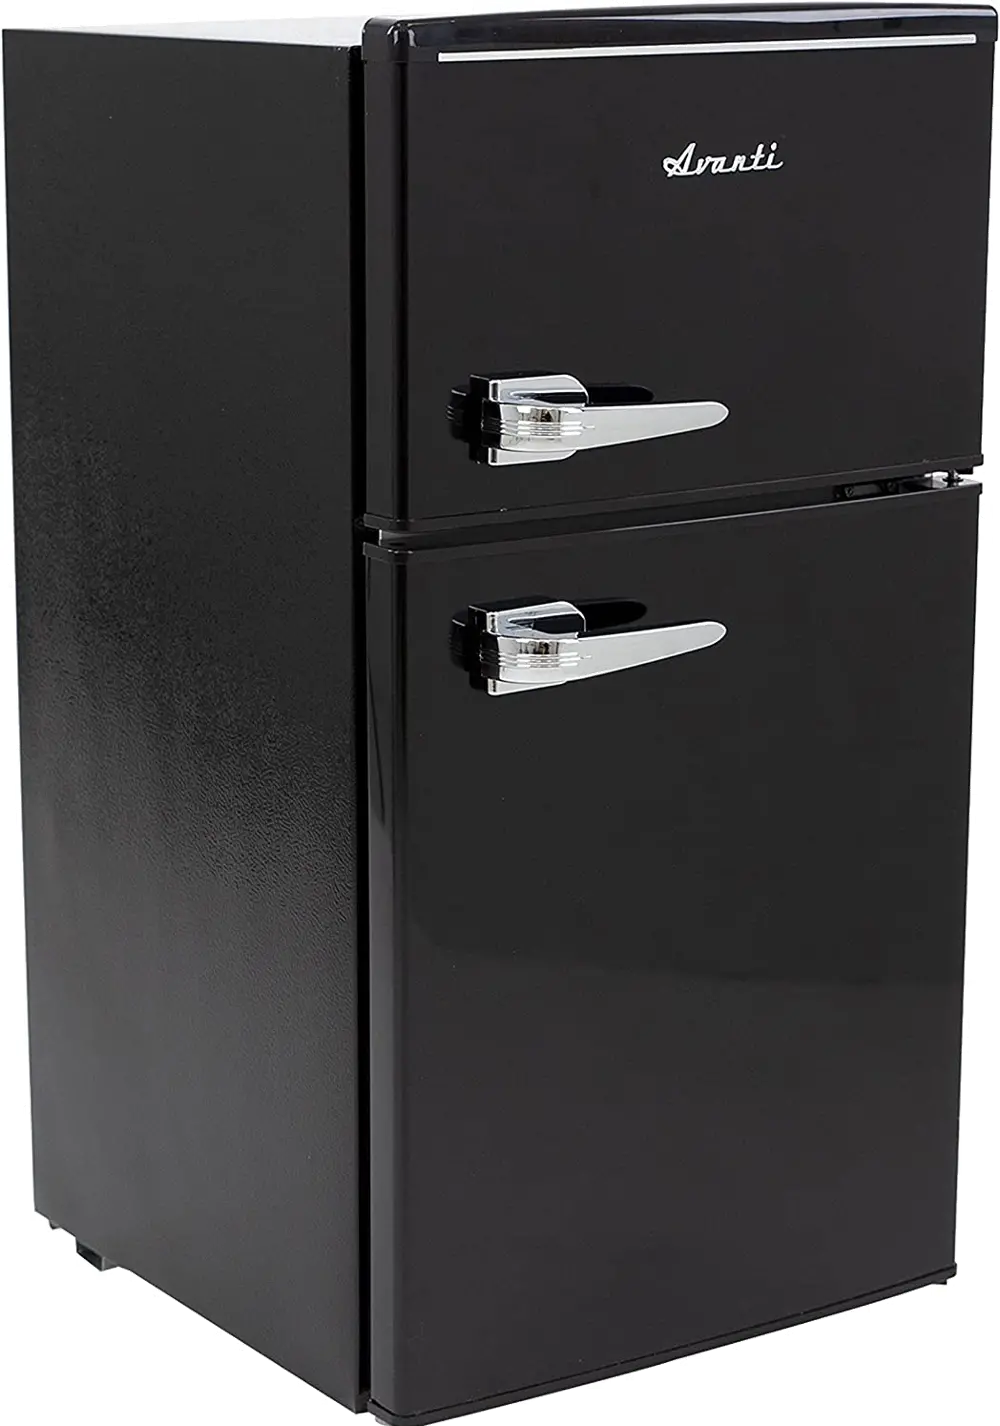 RMRT30X1B-IS Avanti 3.0 cu ft Retro Refrigerator with Freezer - Black-1